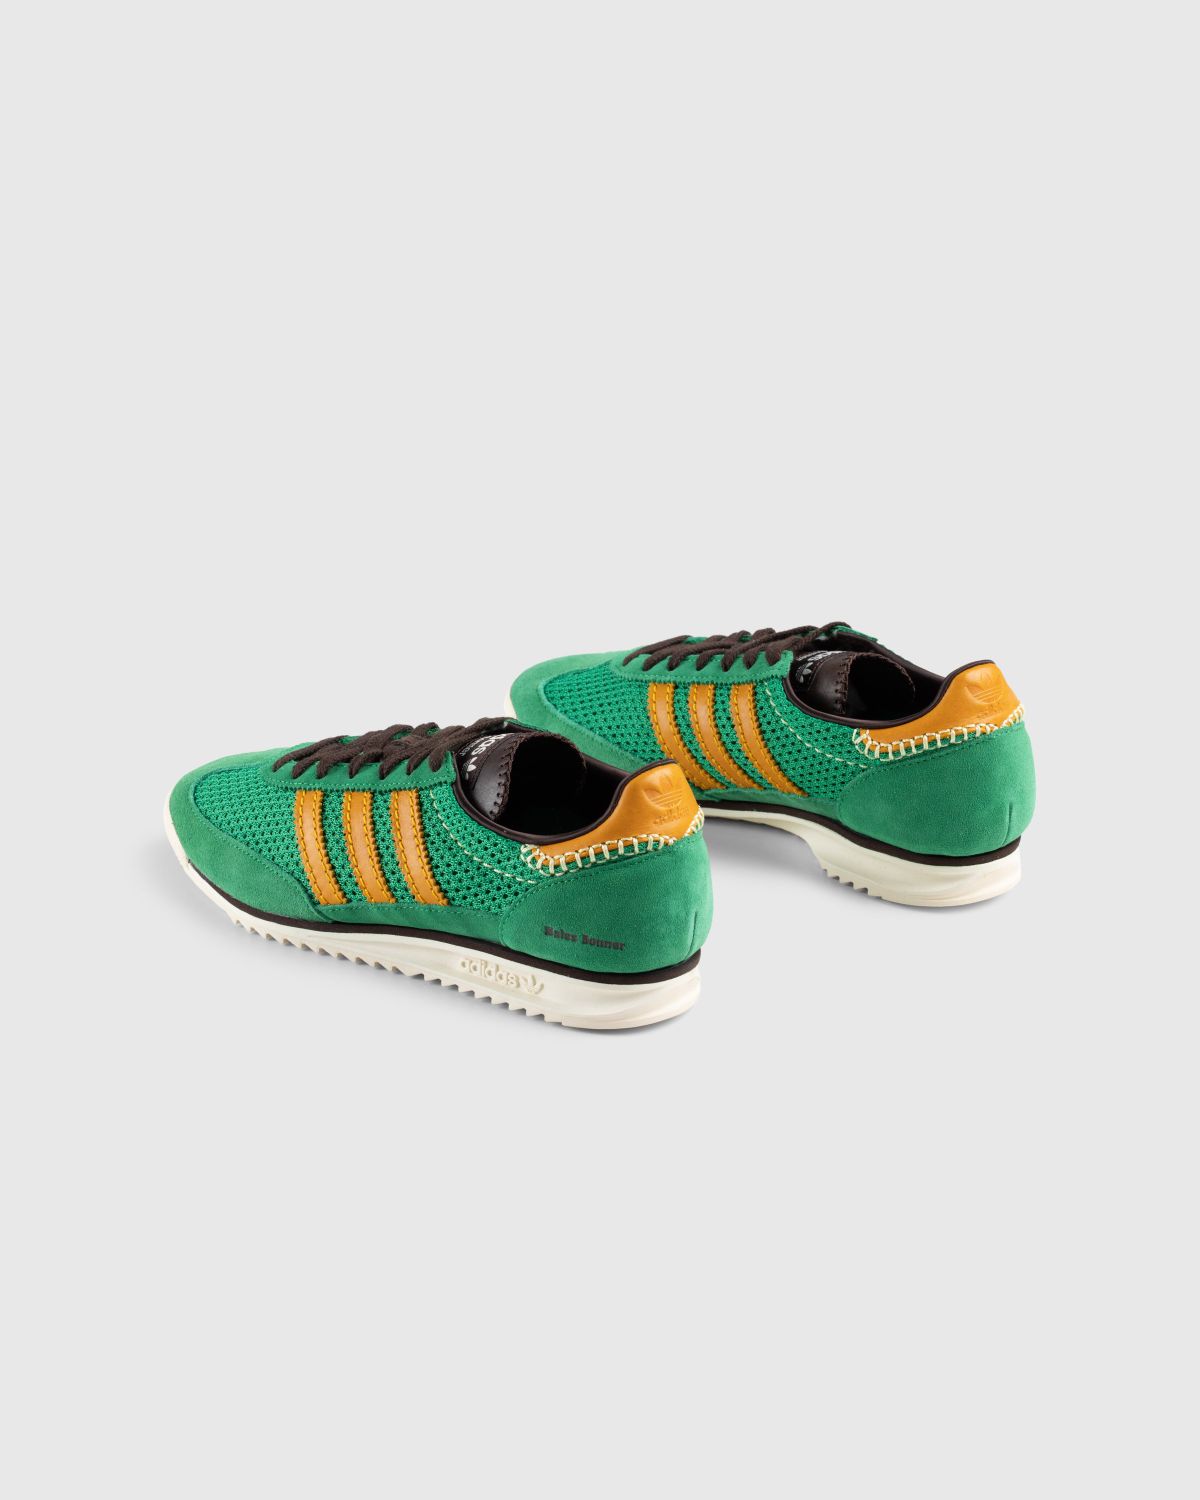 Adidas x Wales Bonner – SL72 Knit Team Green - Sneakers - Green - Image 4